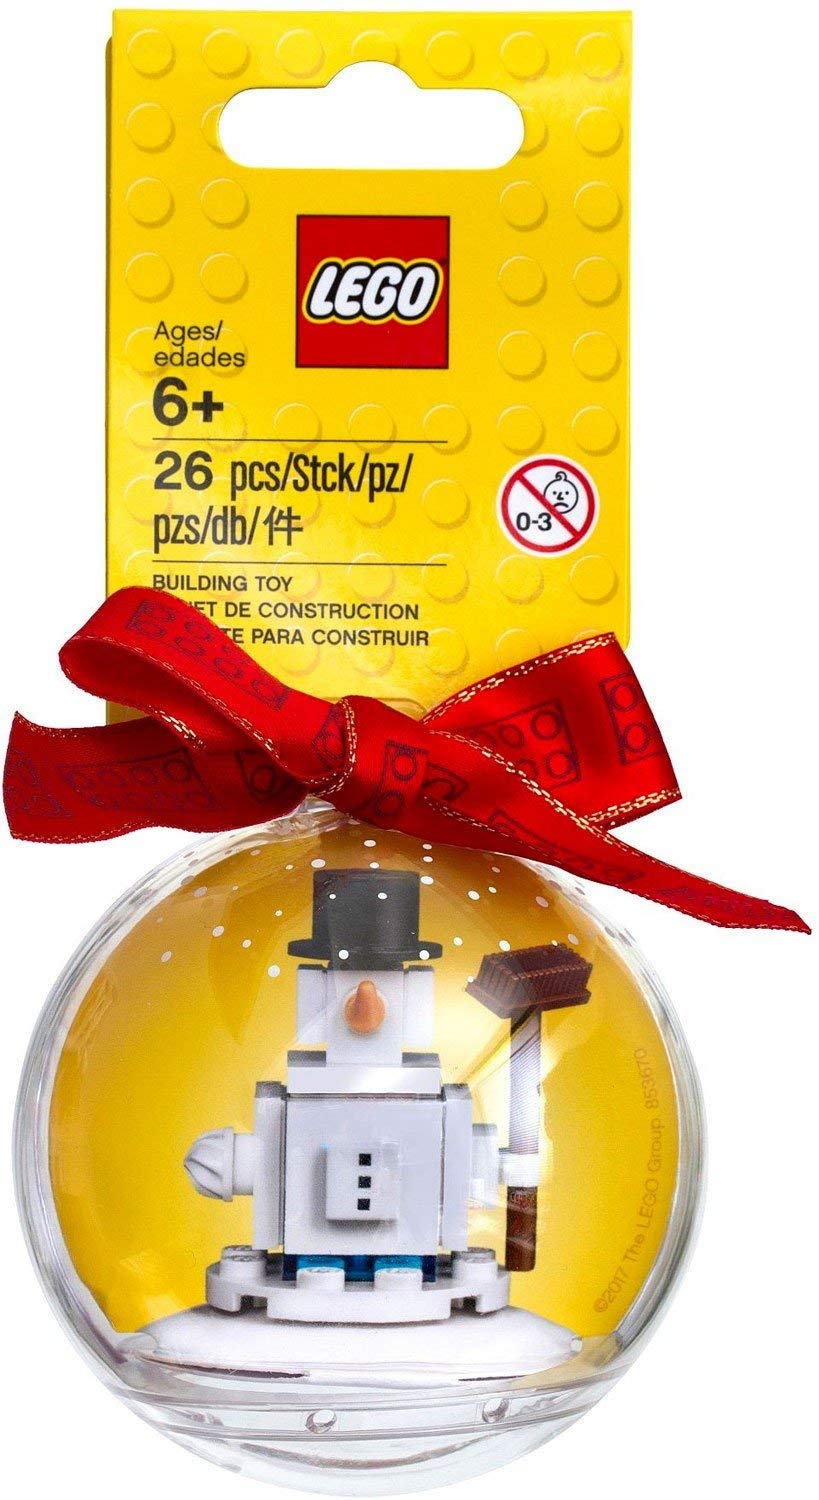 Lego Christmas Ball Snow Globe